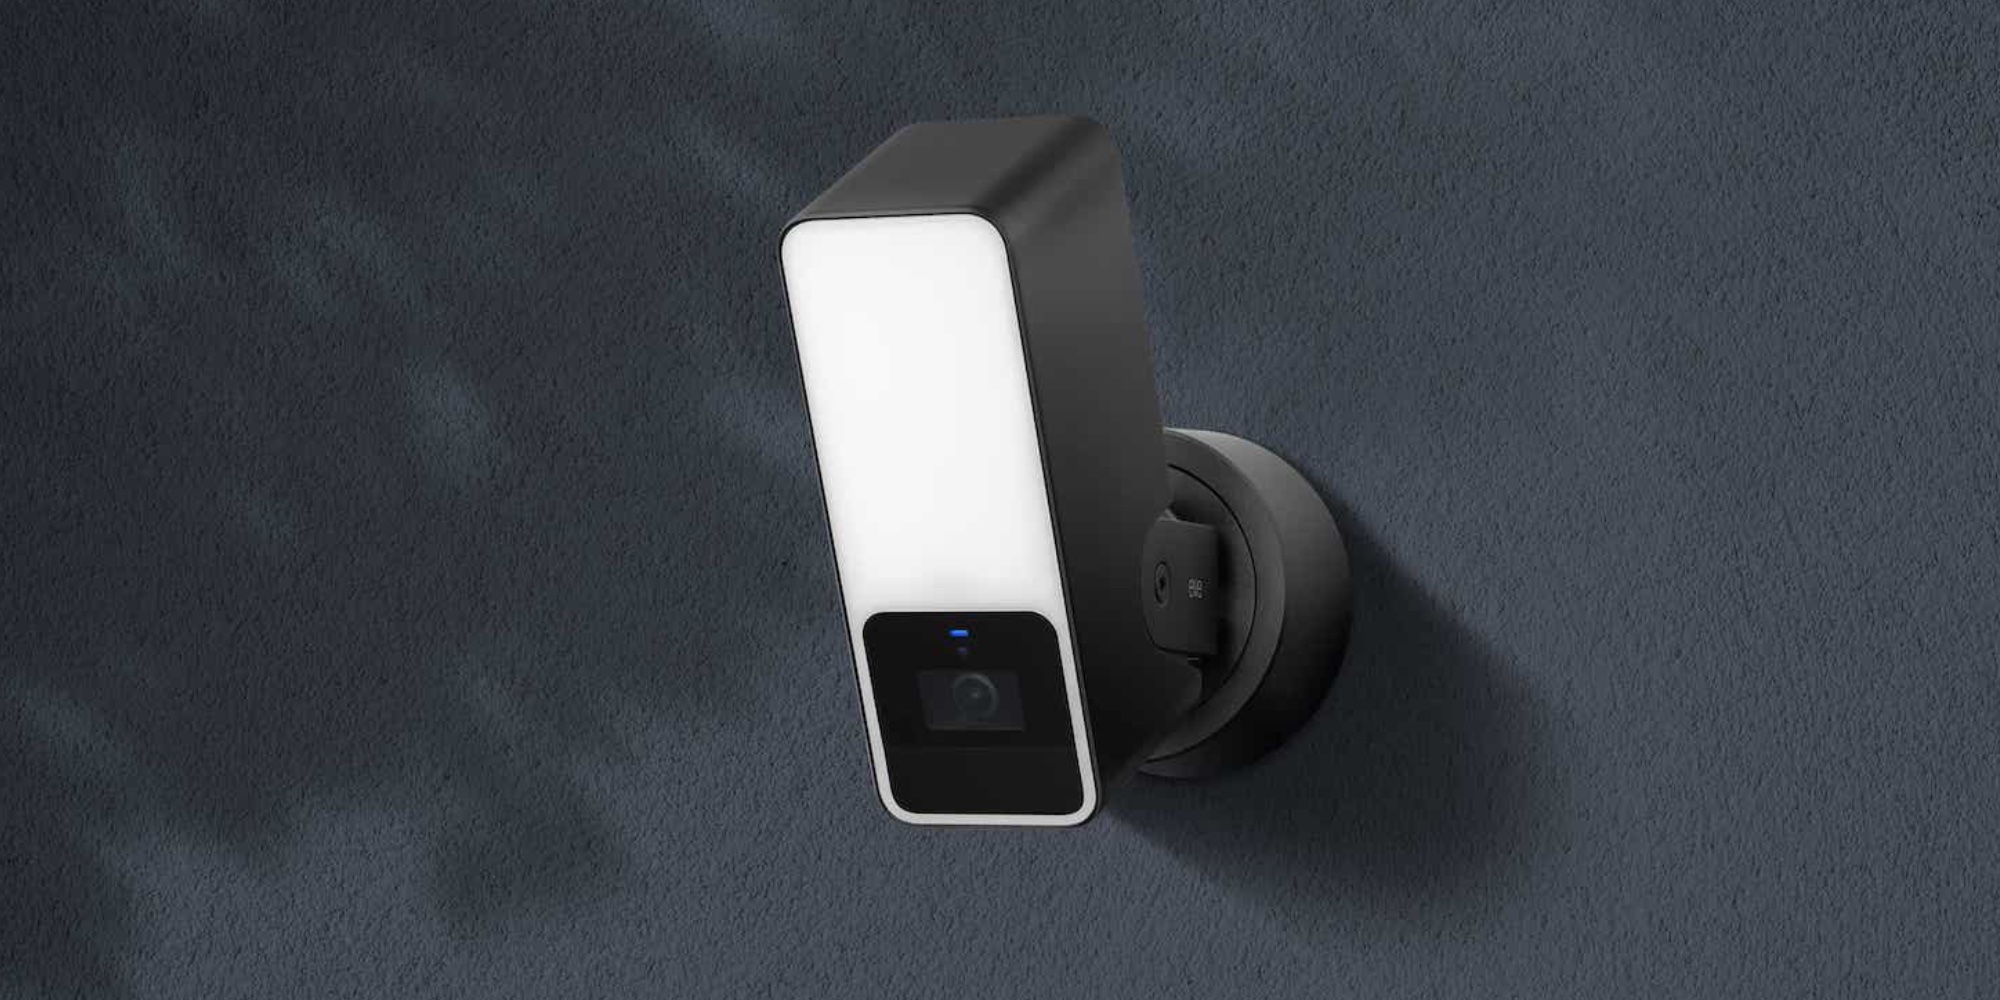 Eve Outdoor Cam, Secure floodlight camera with Apple HomeKit